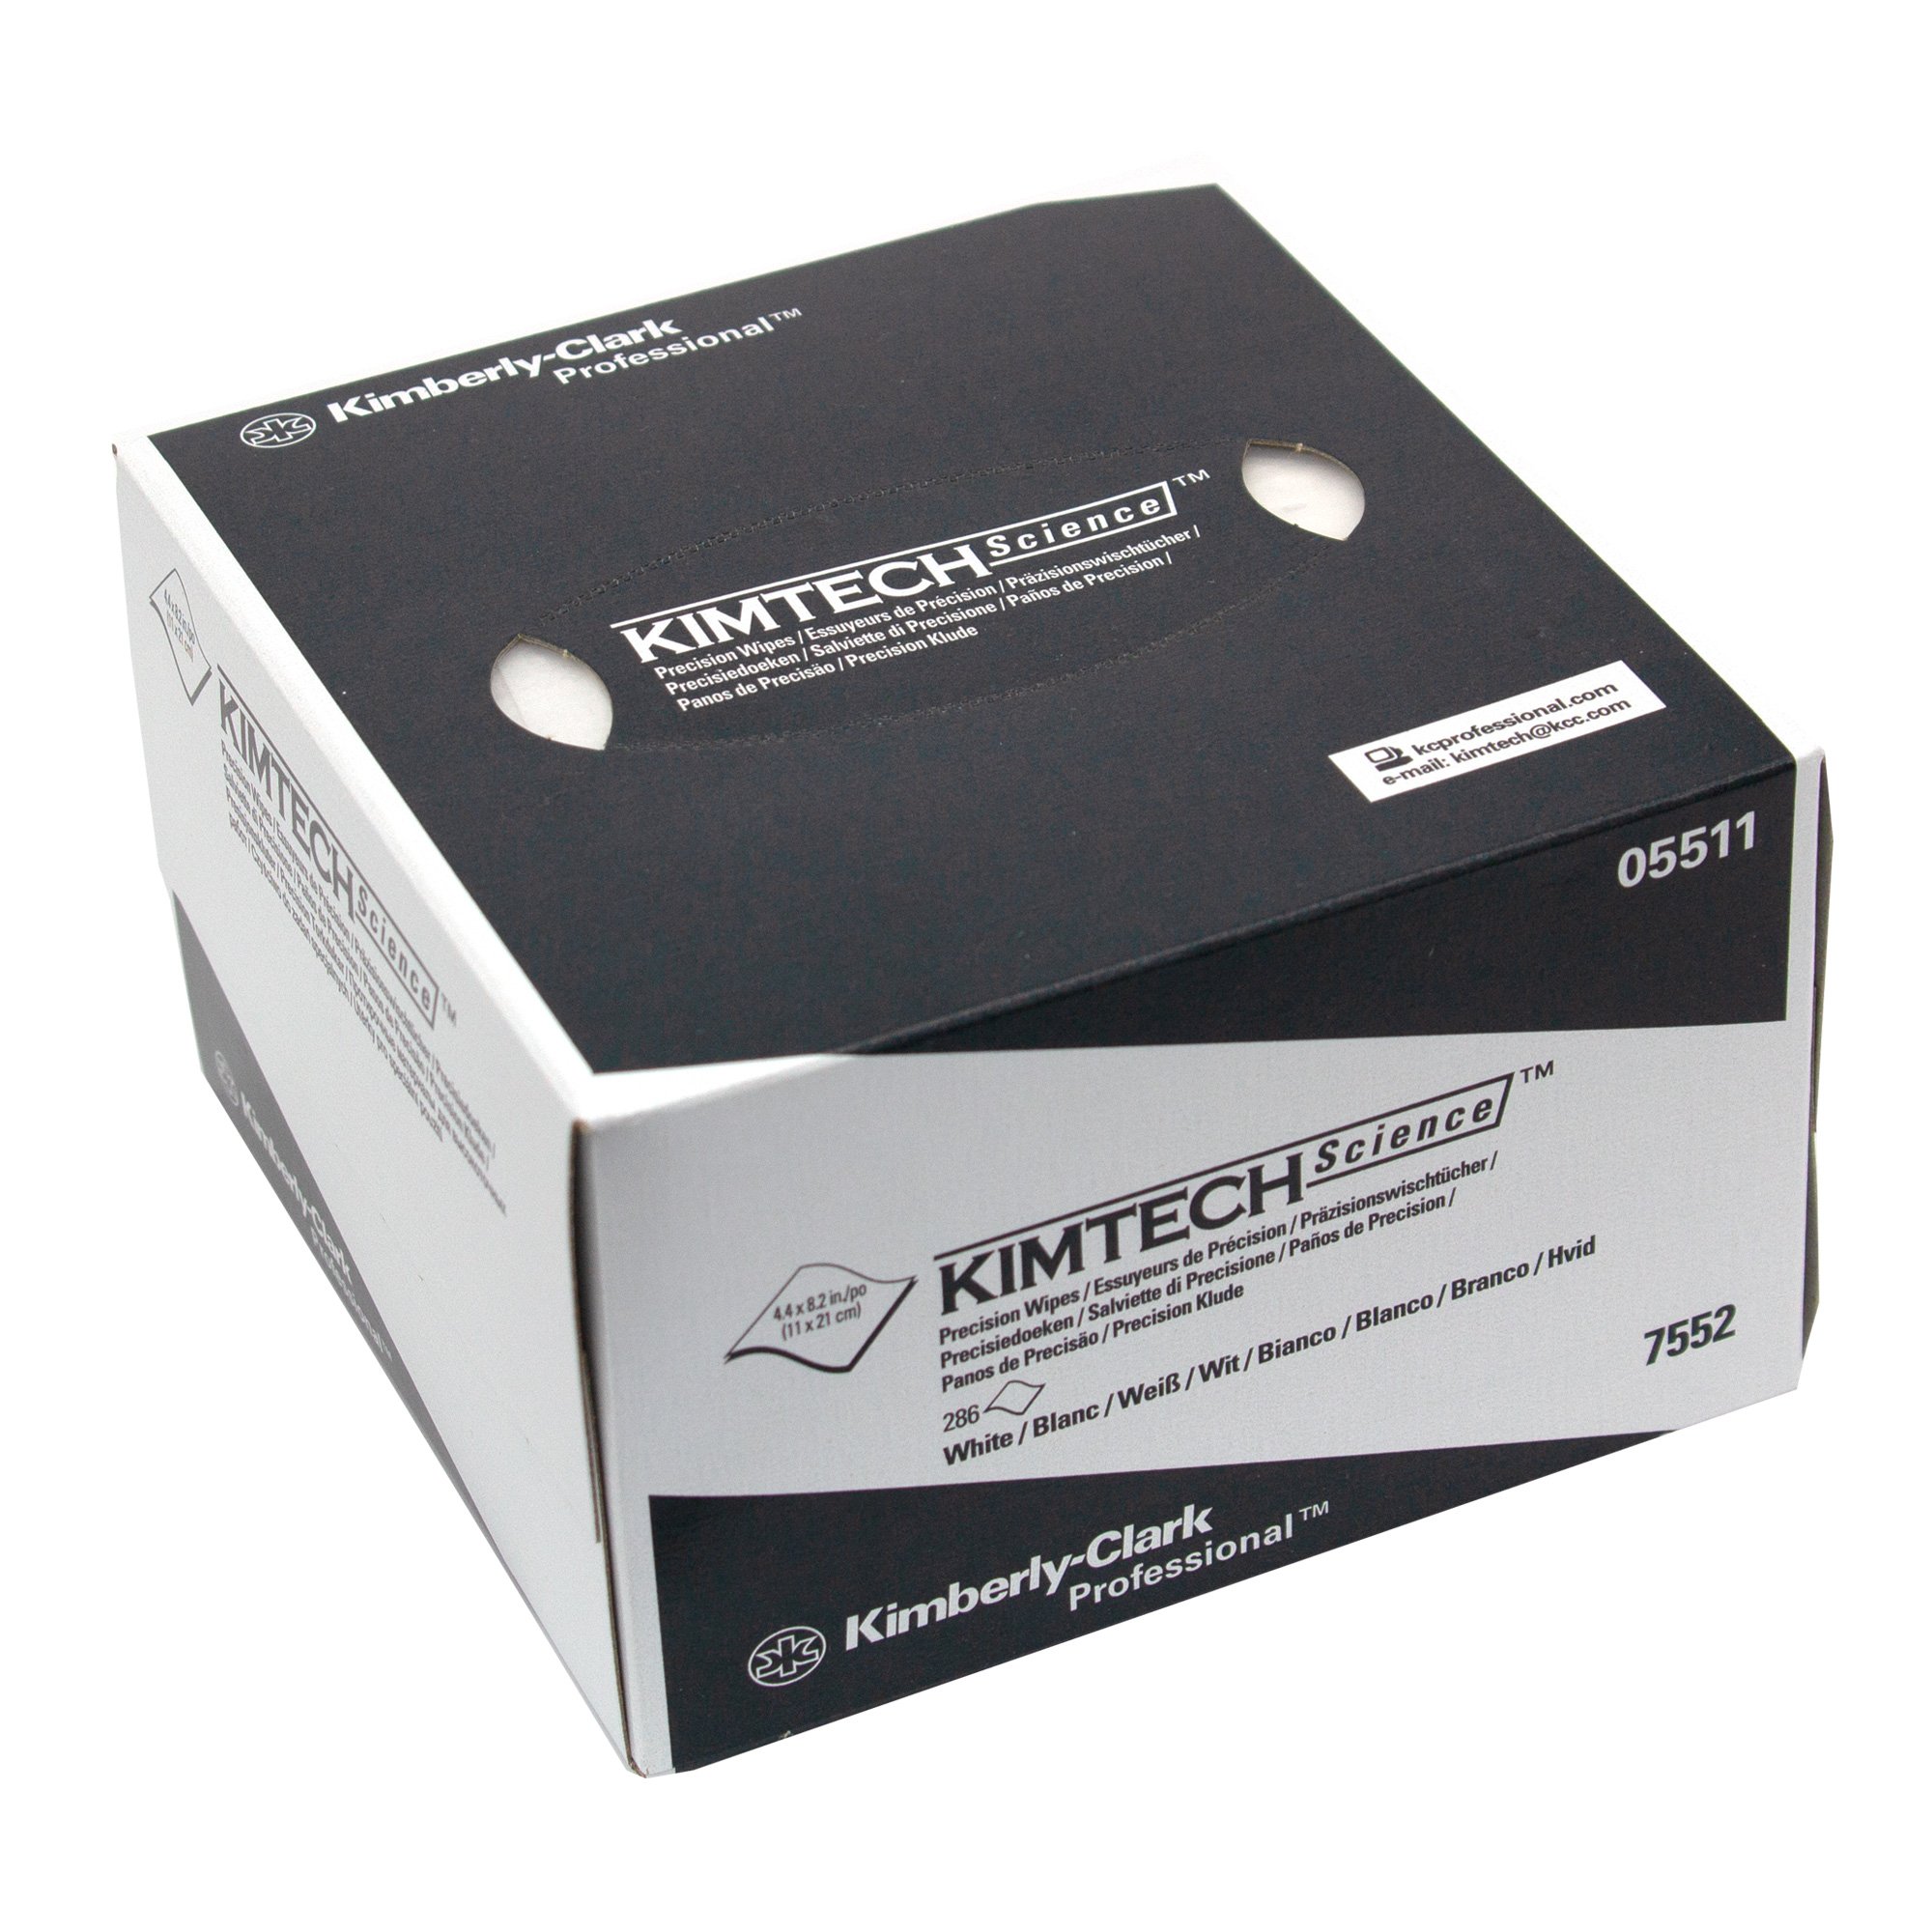 Kimtech Science 7552 Präzisionstücher weiß in der Zupfbox, 1-lagig, 11,2 x 20,8 cm, 8580 Tücher